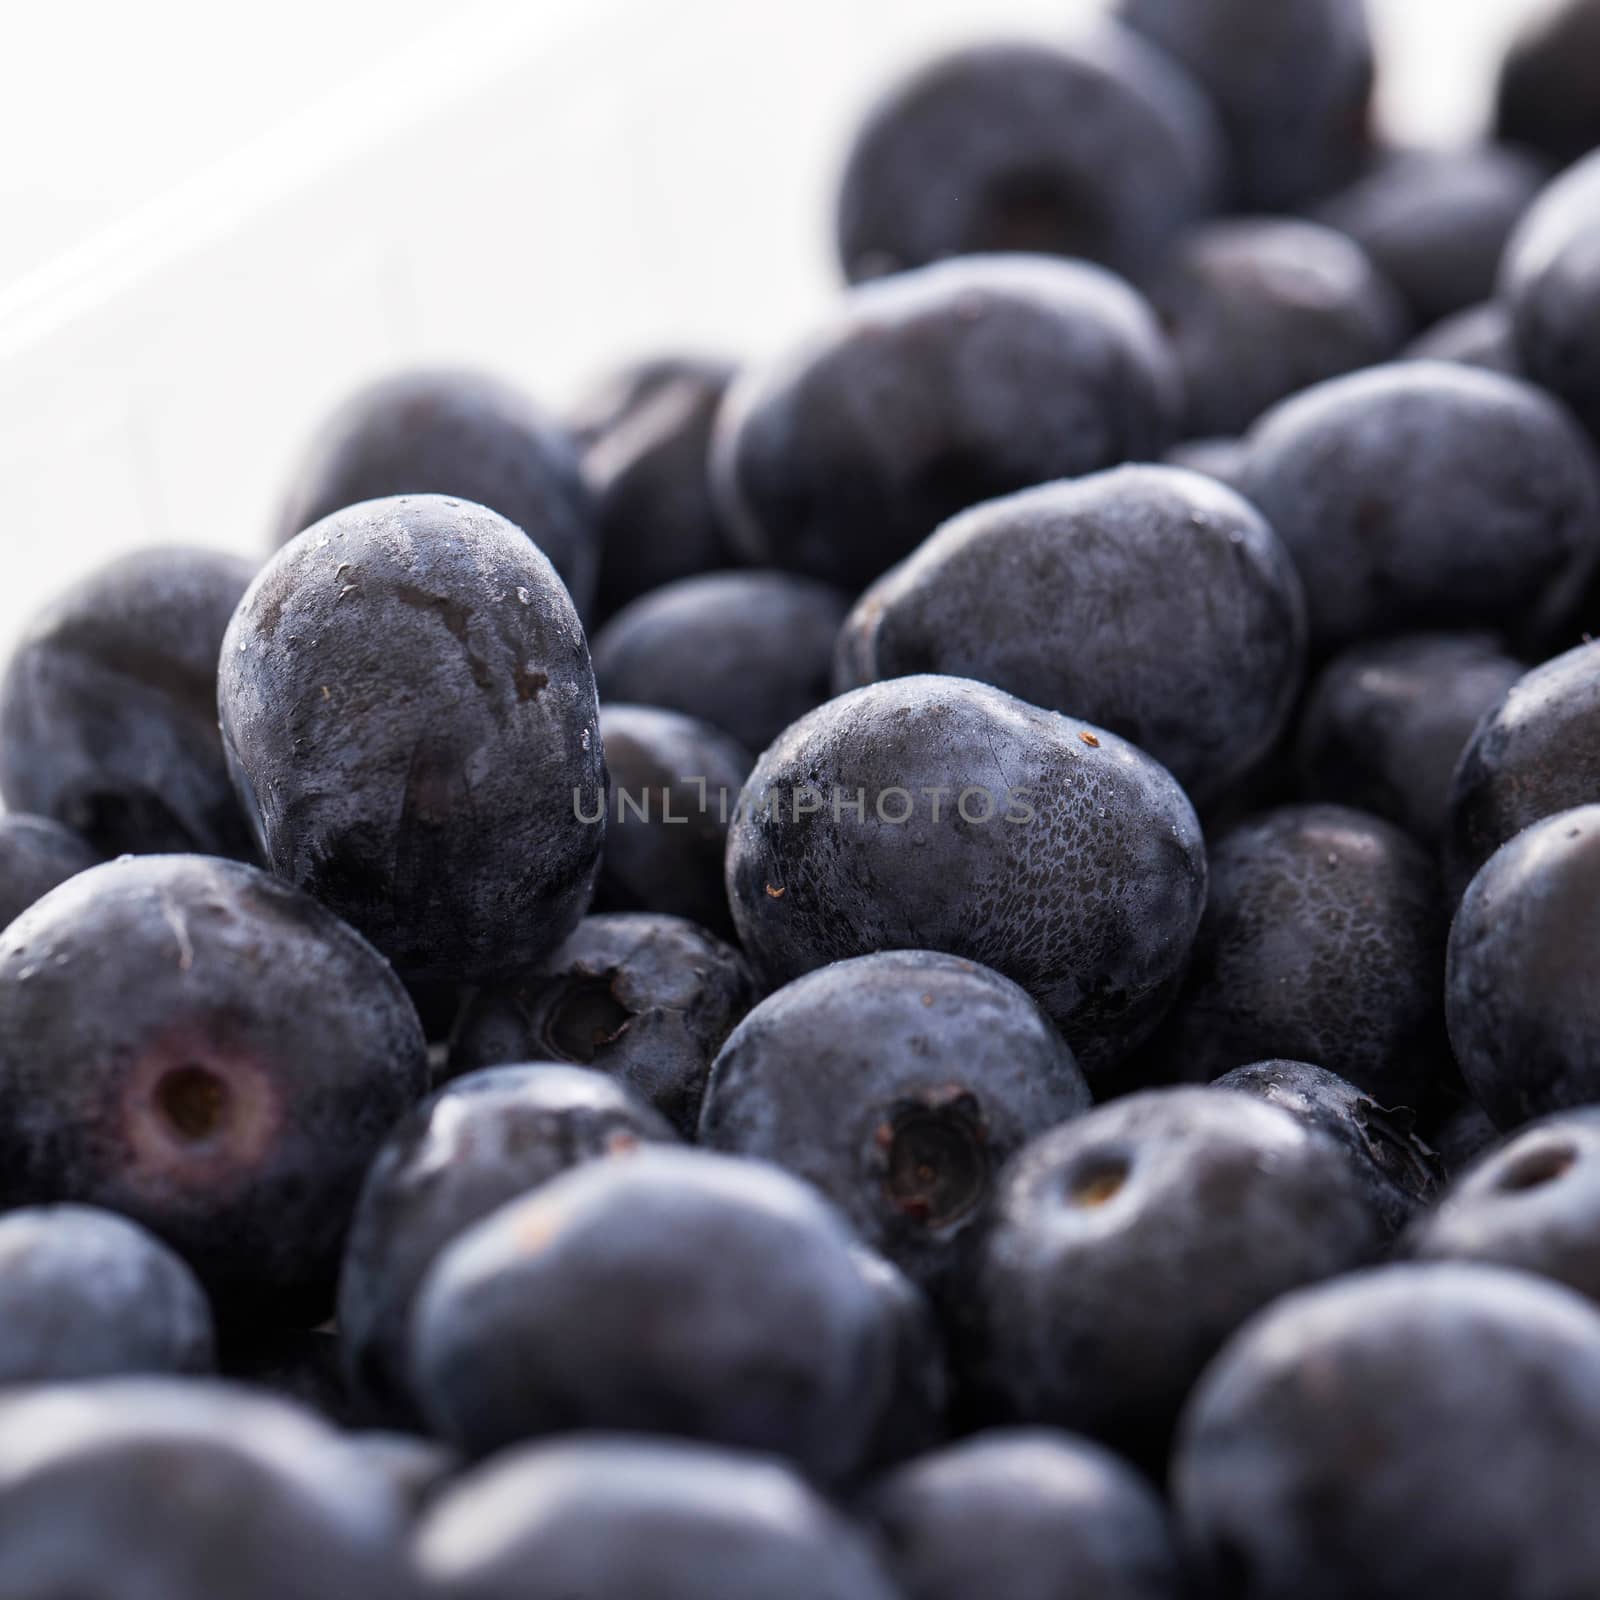 Lots of blueberries by rufatjumali